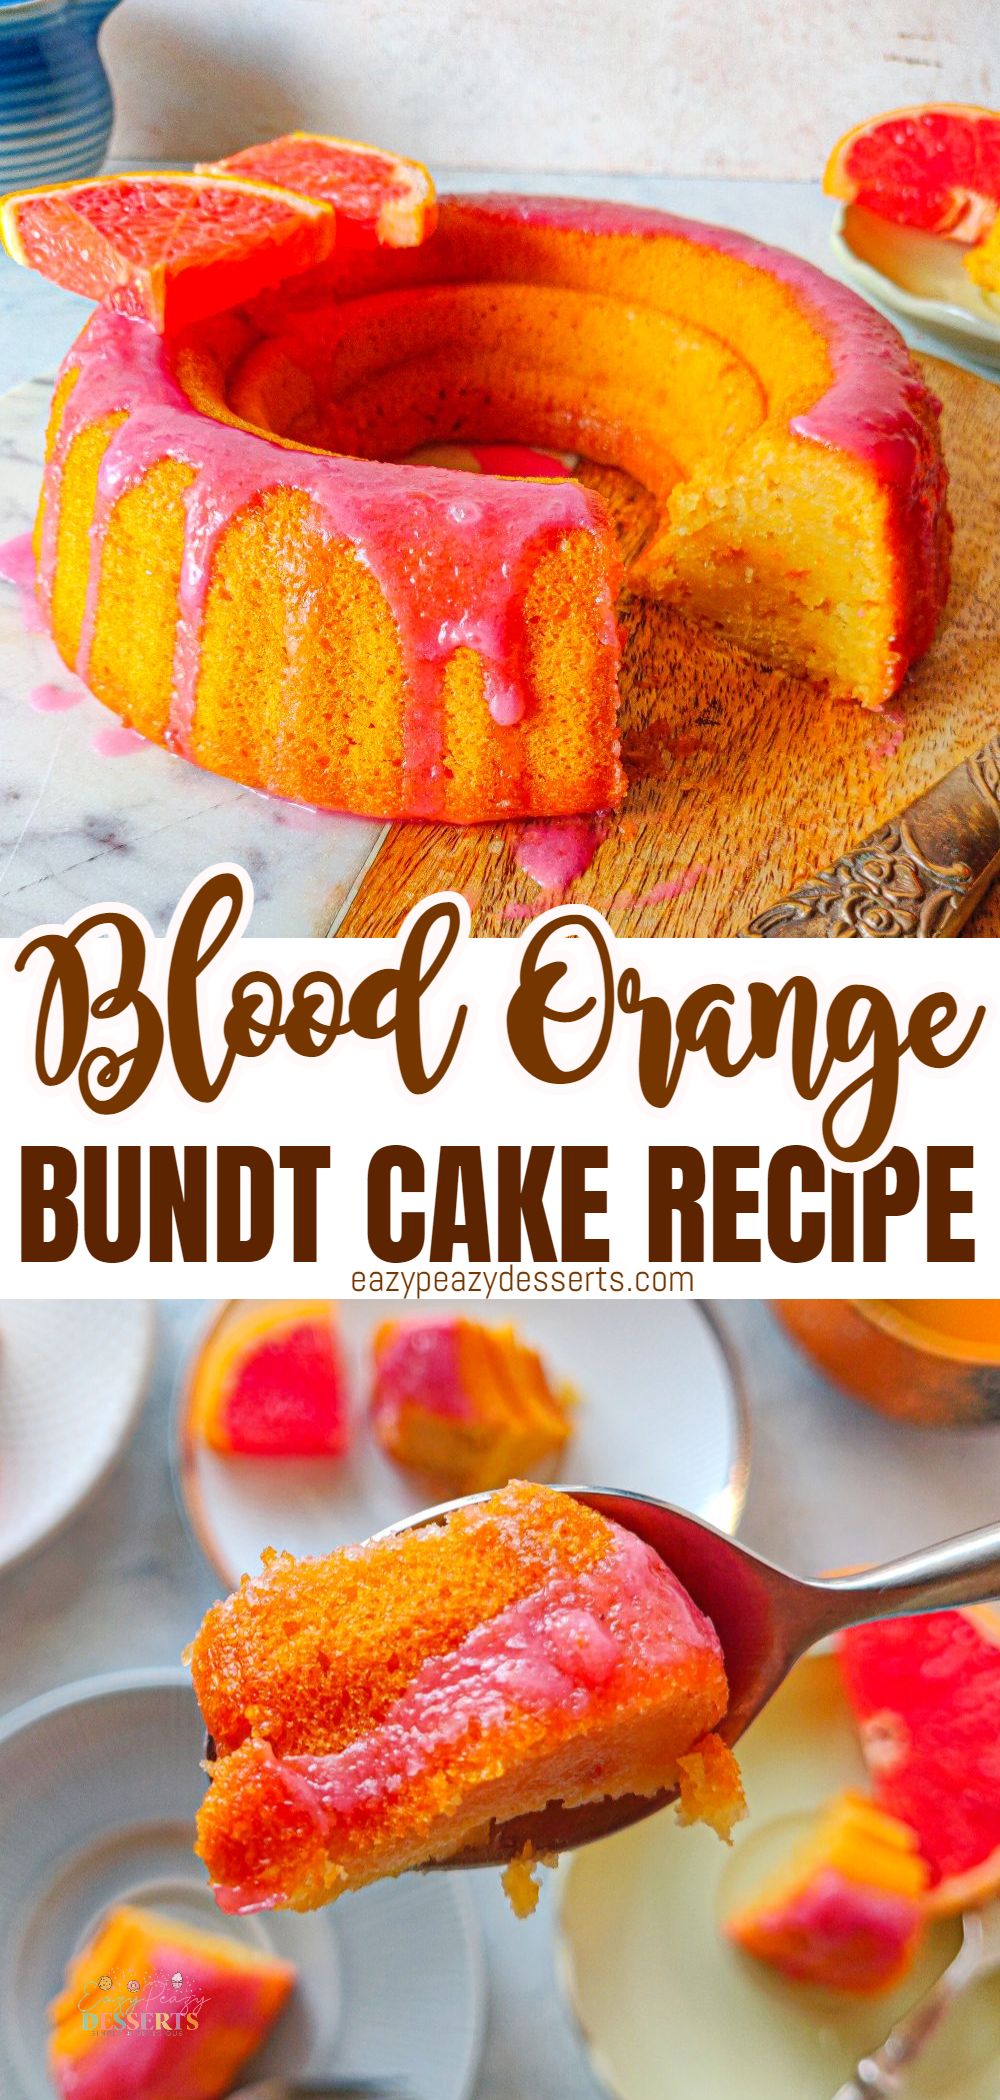 Photo collage of blood orange cake baked in a bundt pan